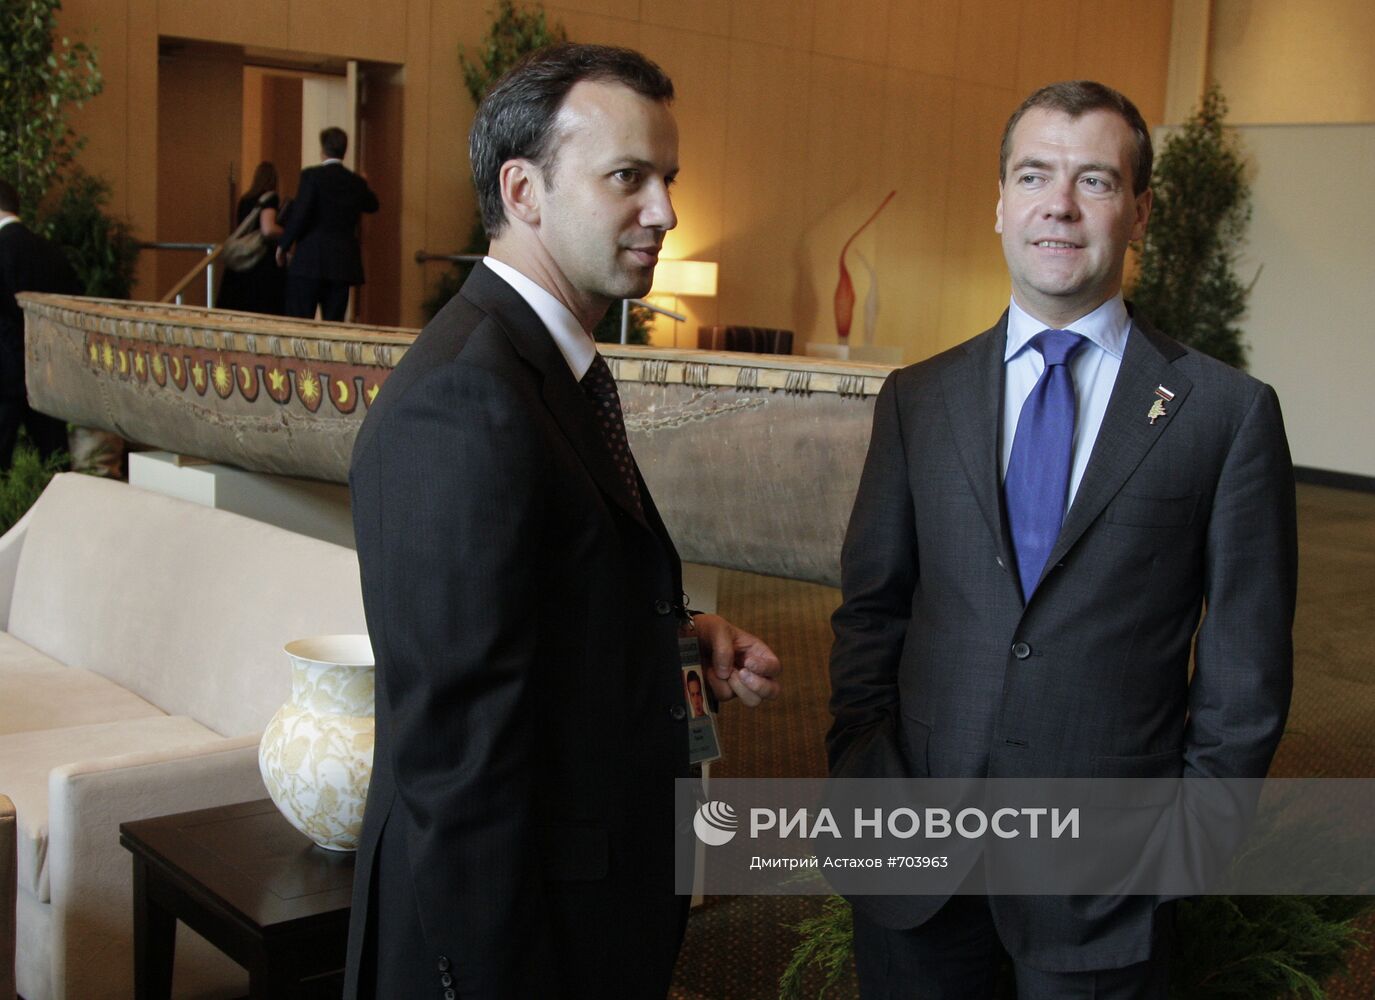 Д. Медведев принял участие в саммите G8 в Канаде